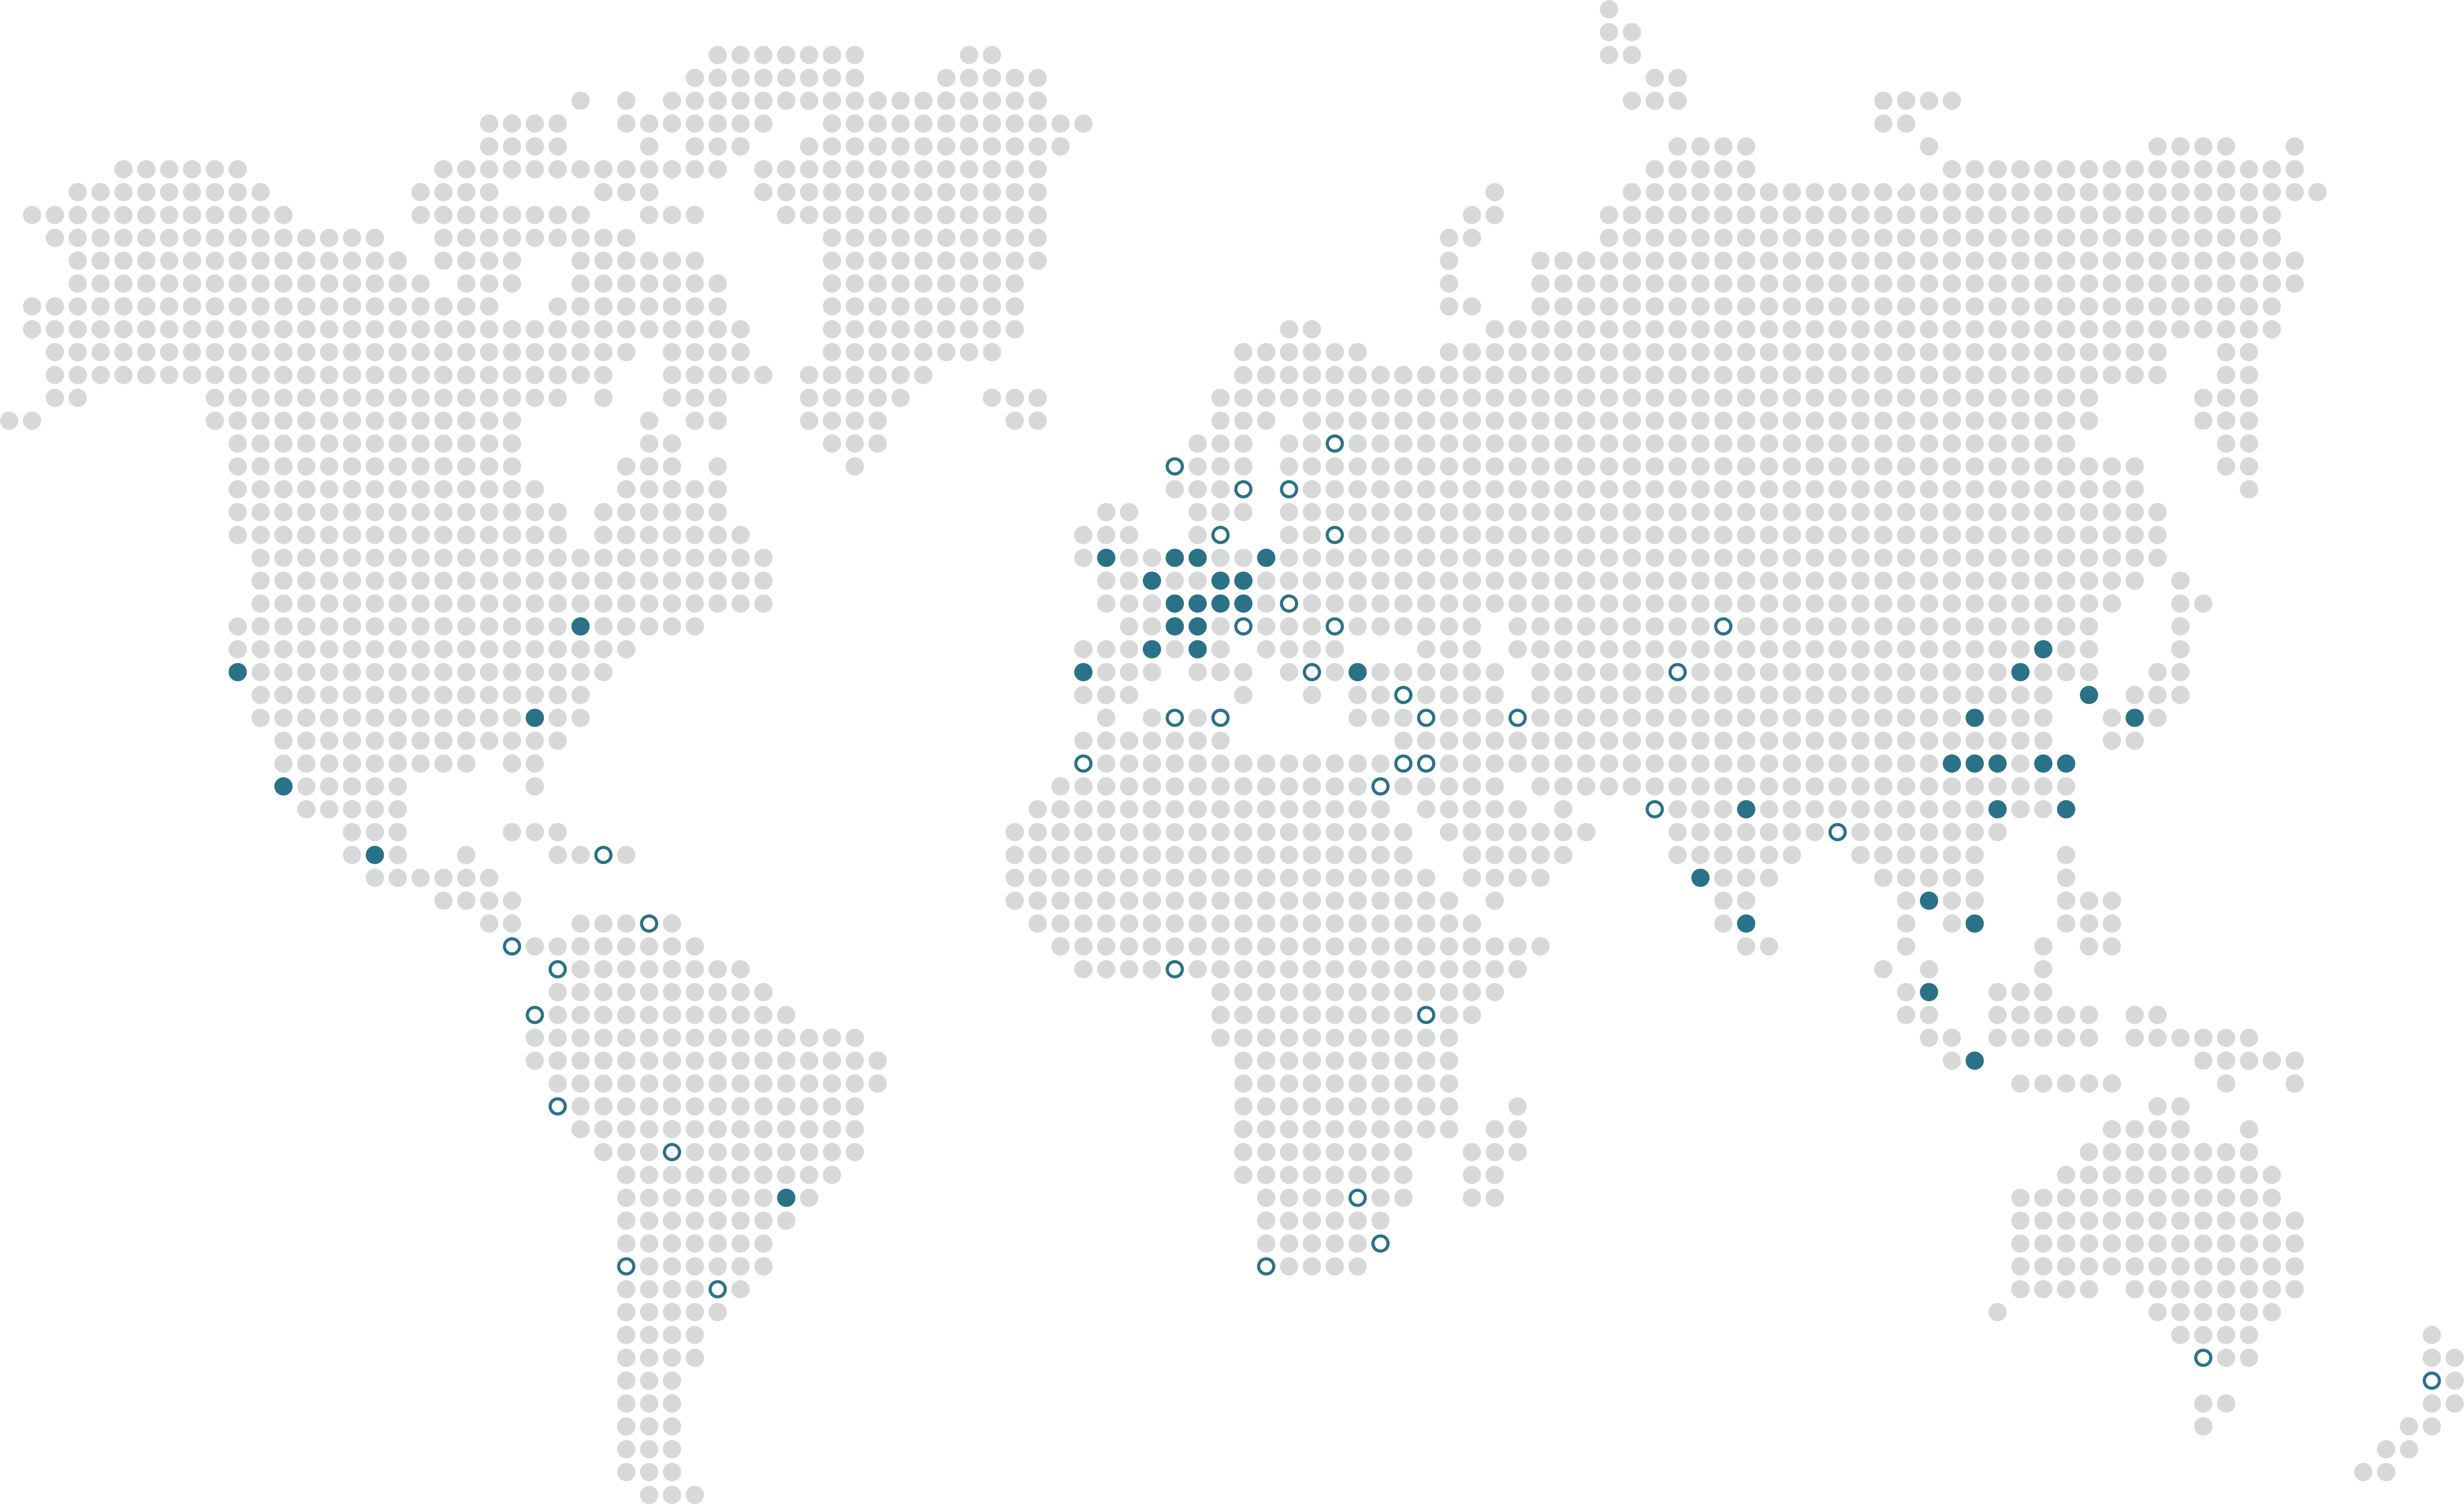 Stäubli's global presence throughout the world